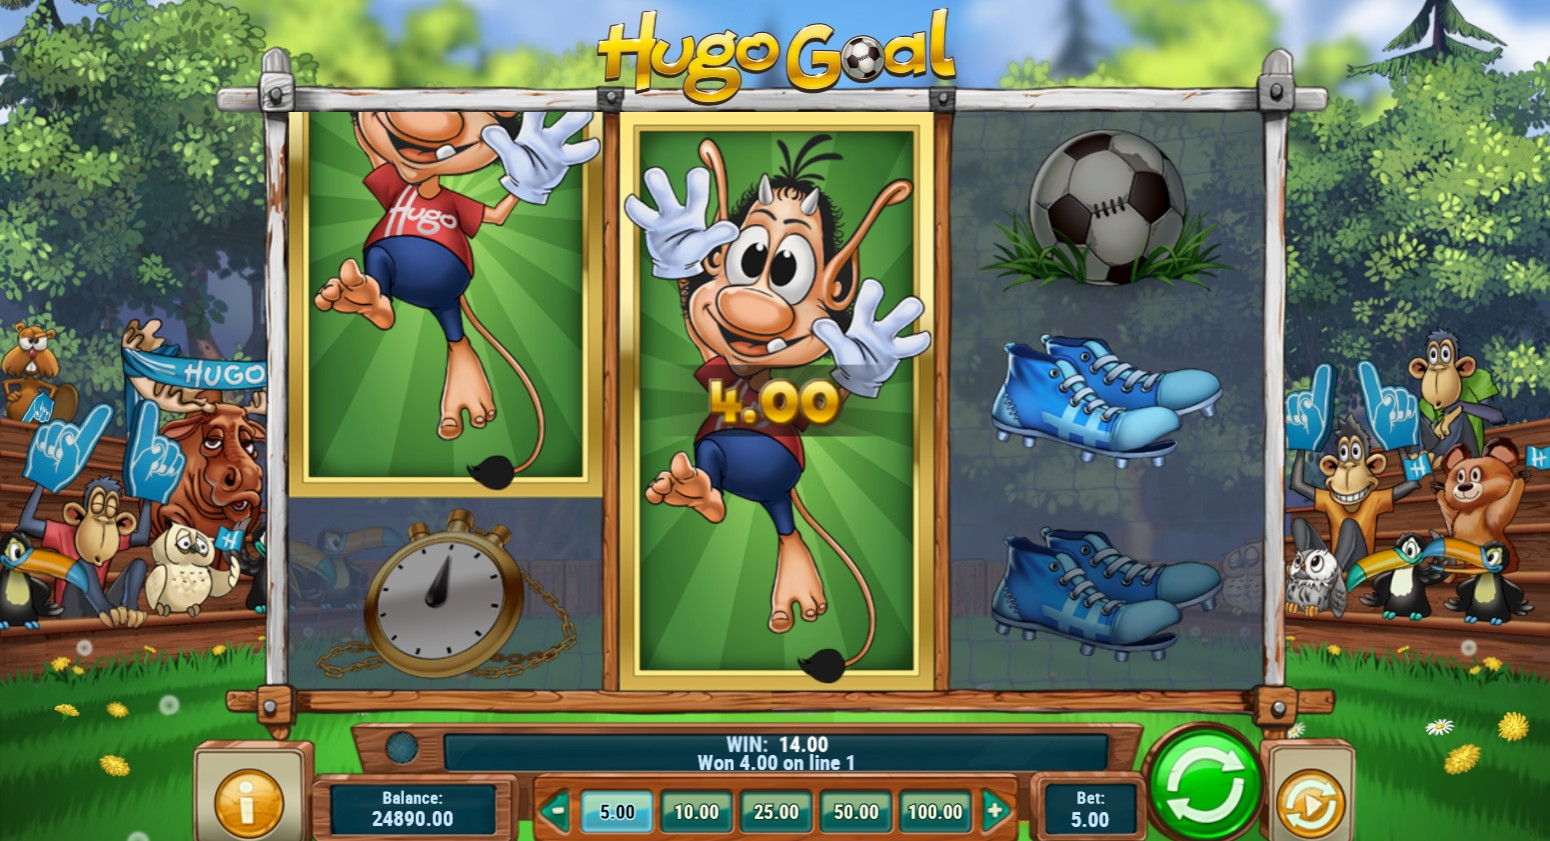 Hugo Goal (Hugo Goal) from category Slots